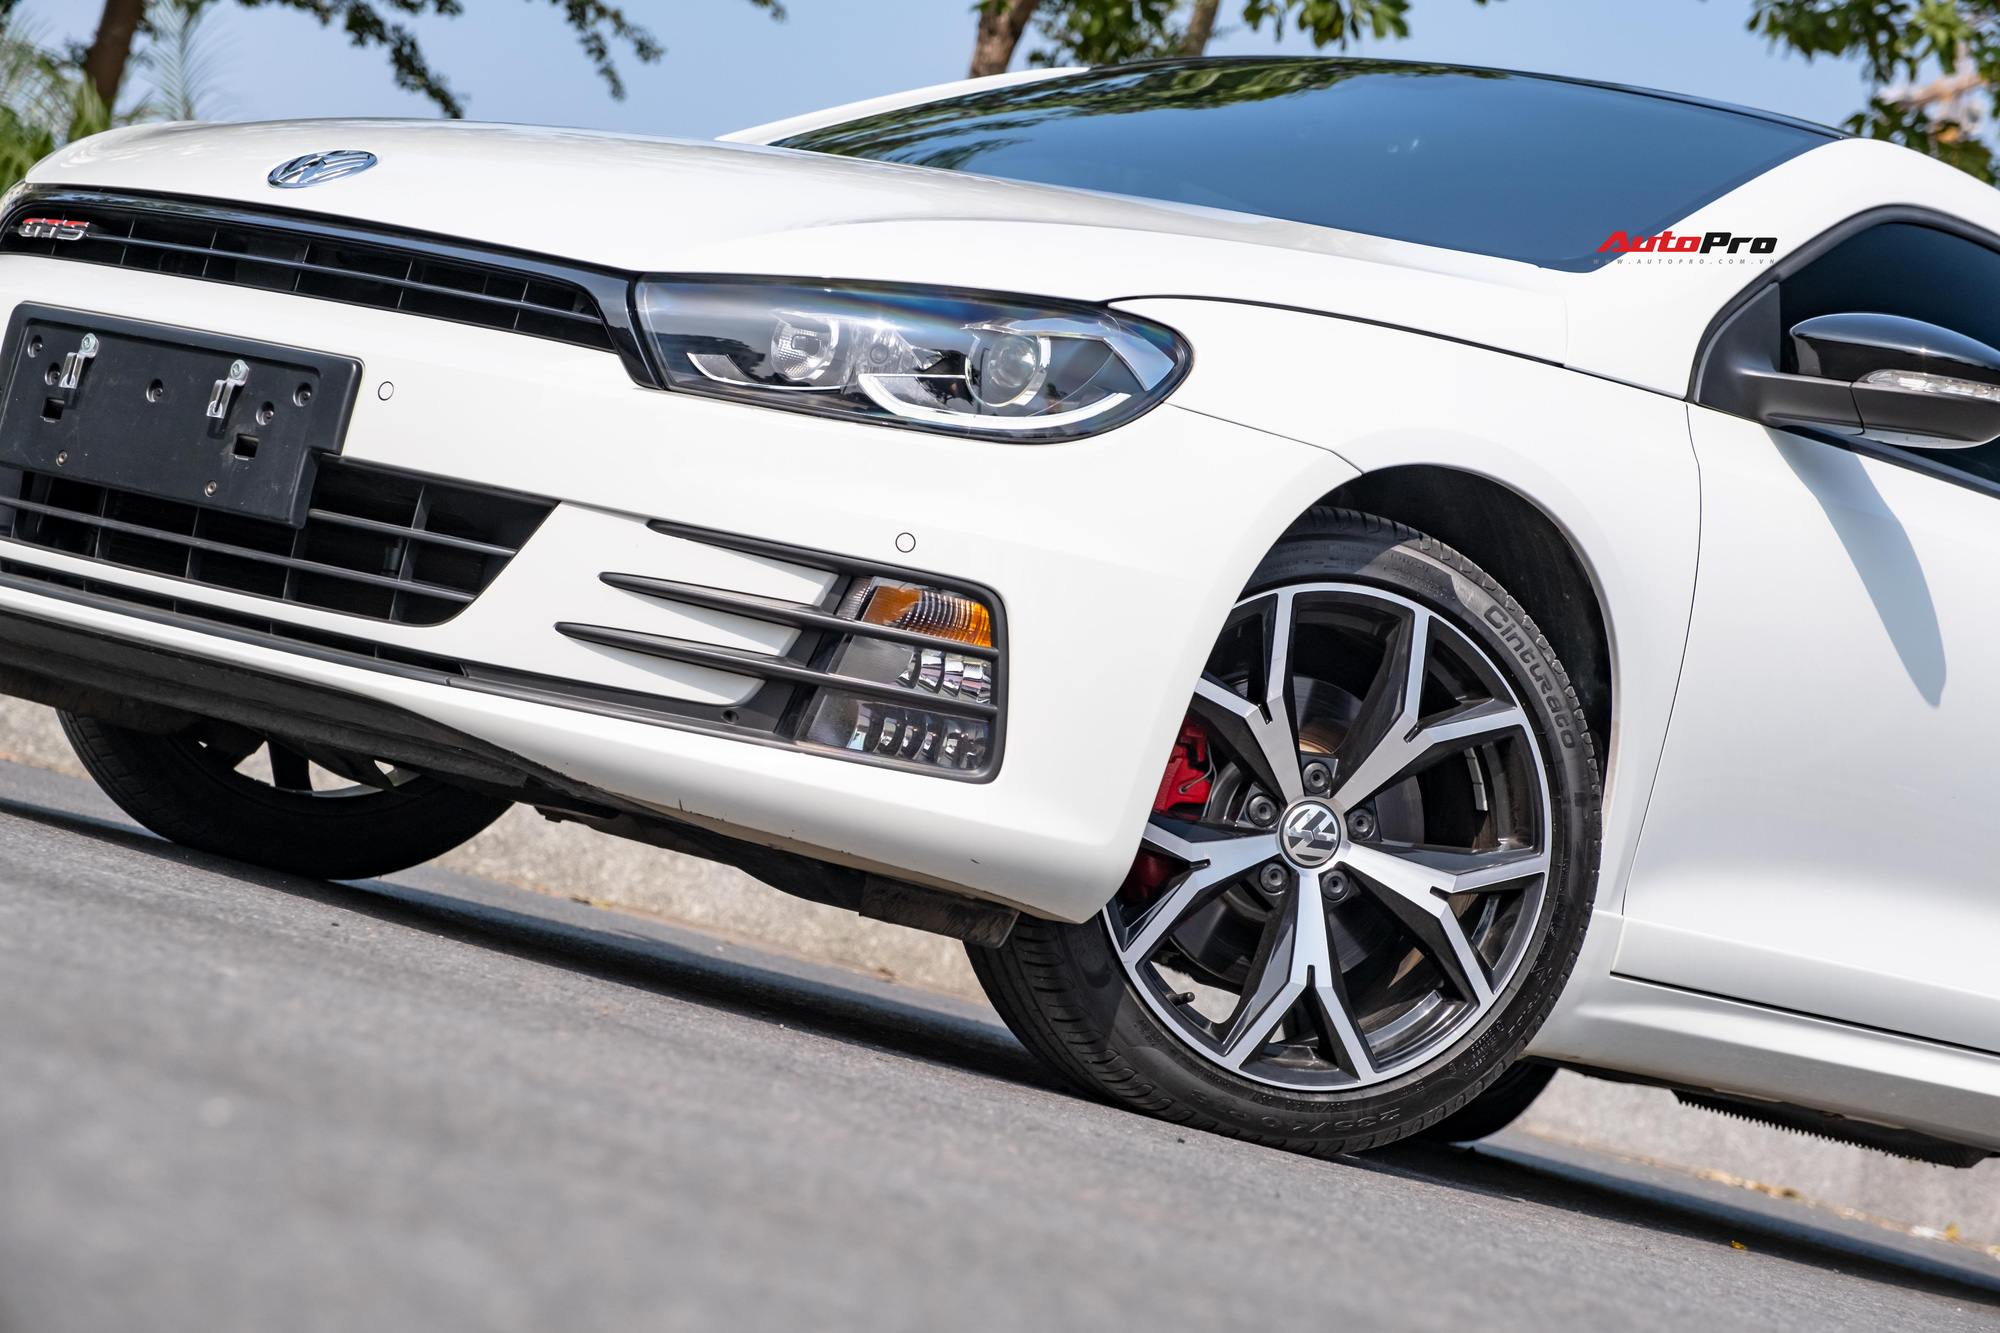 Đánh giá xe Volkswagen Scirocco R  hot hatch 17 tỷ đồng XEHAYVN   YouTube